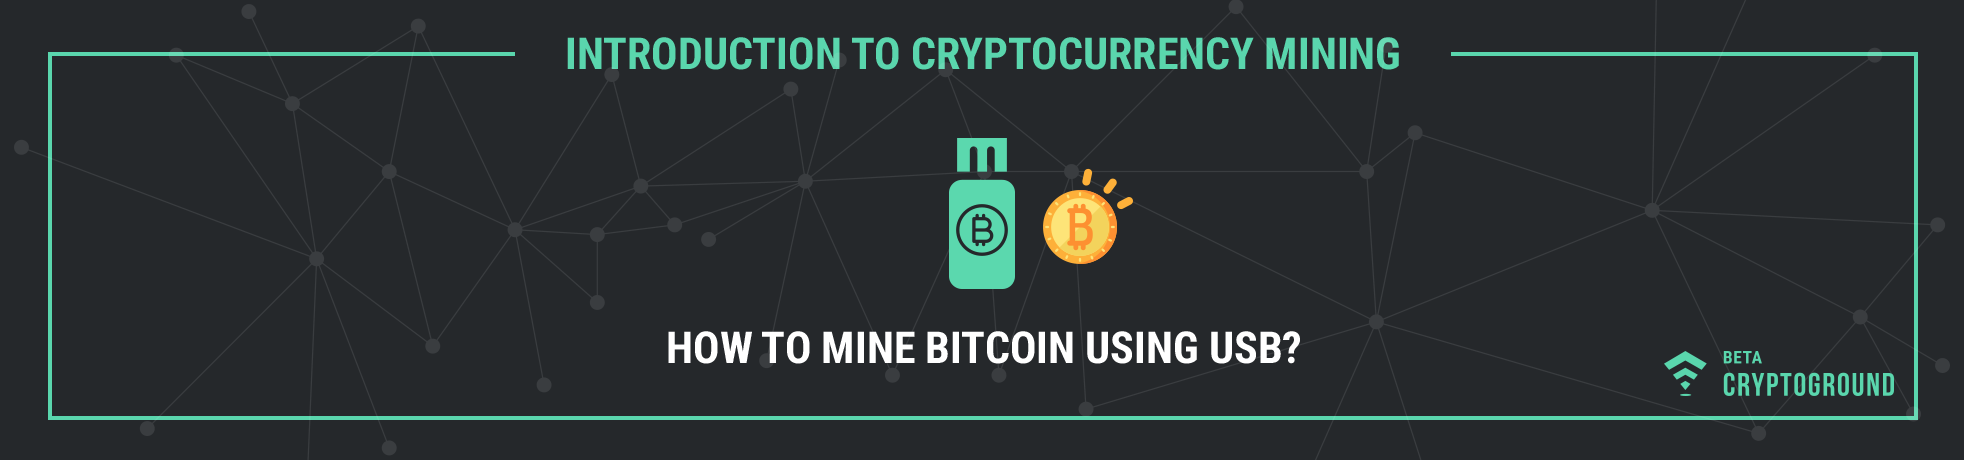 How to mine bitcoin using USB?